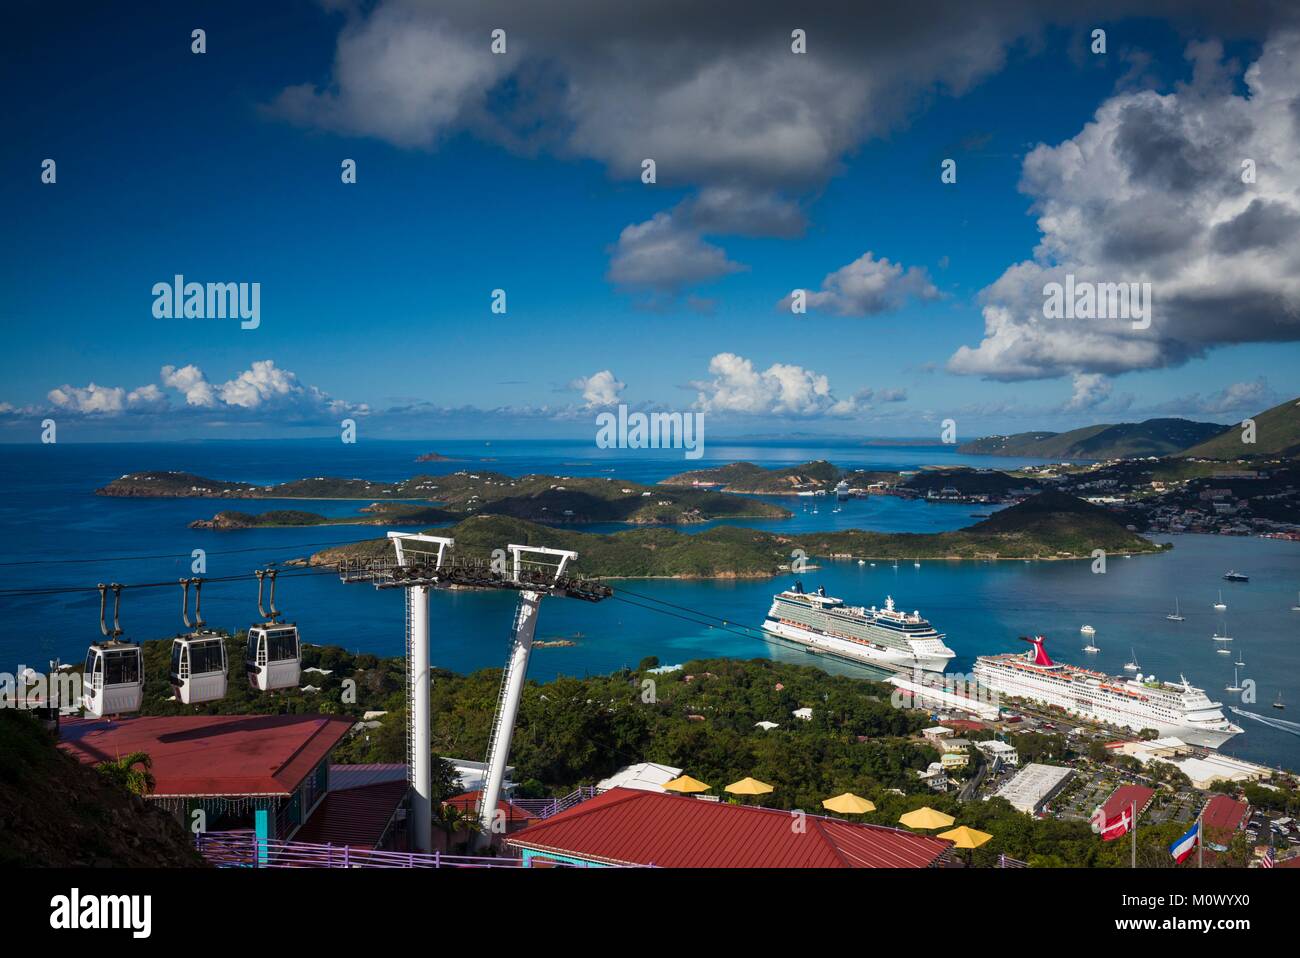 Stati Uniti Isole Vergini, St. Thomas,Charlotte Amalie,Havensight Cruiseship porta da Paradise Point con san Tommaso Skyride tram Foto Stock